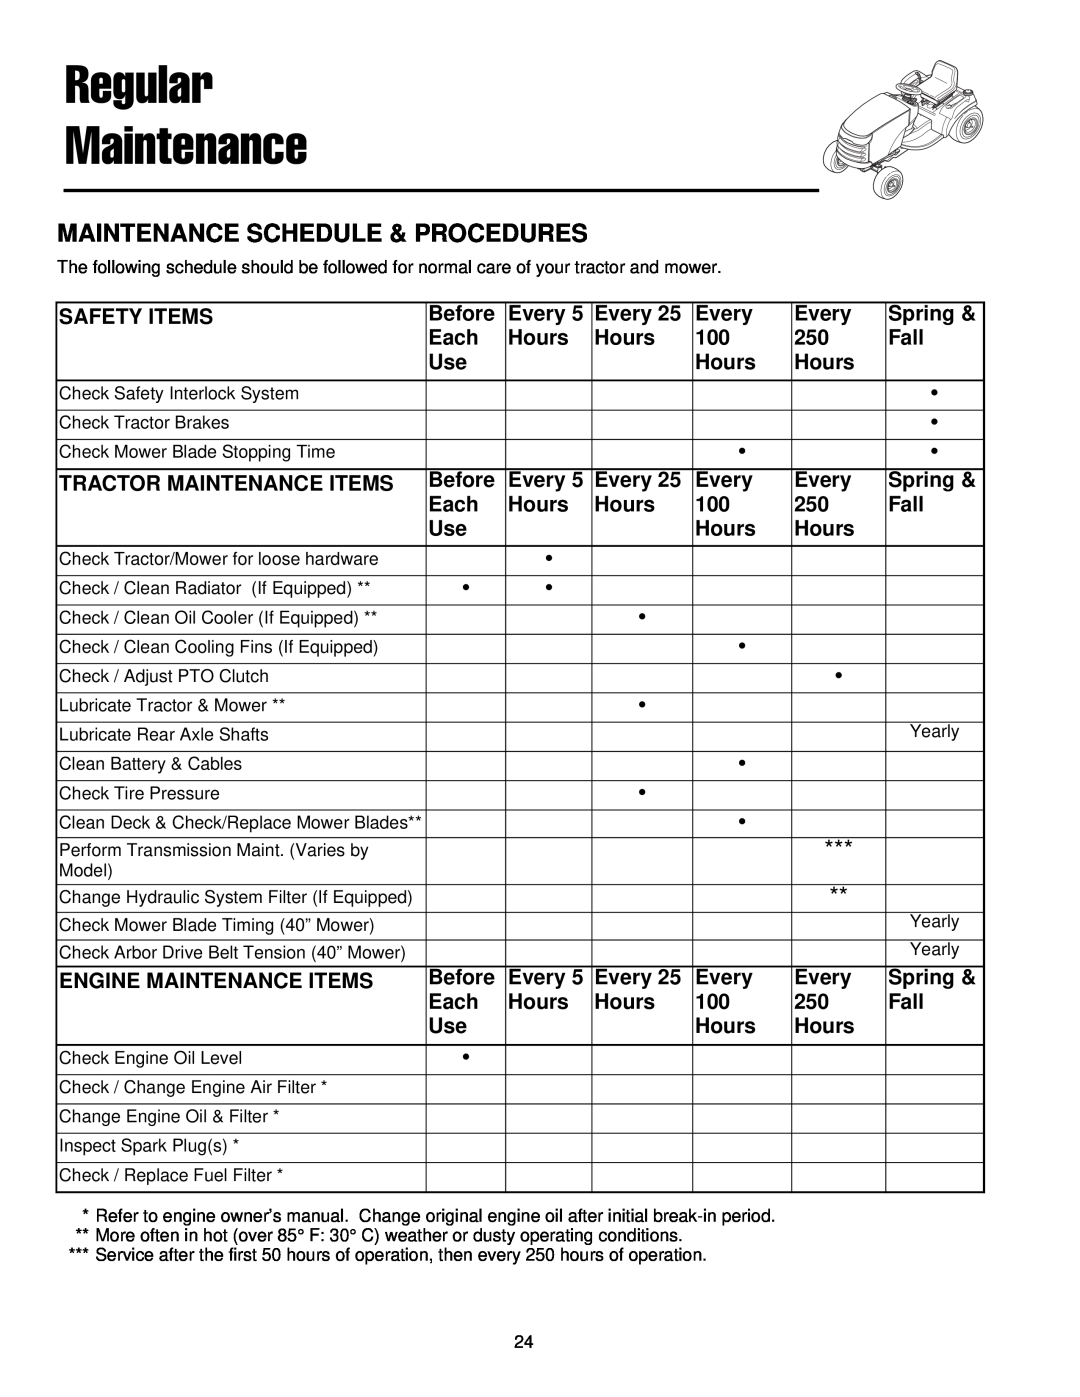 Simplicity 300 Series manual Regular Maintenance, Maintenance Schedule & Procedures 